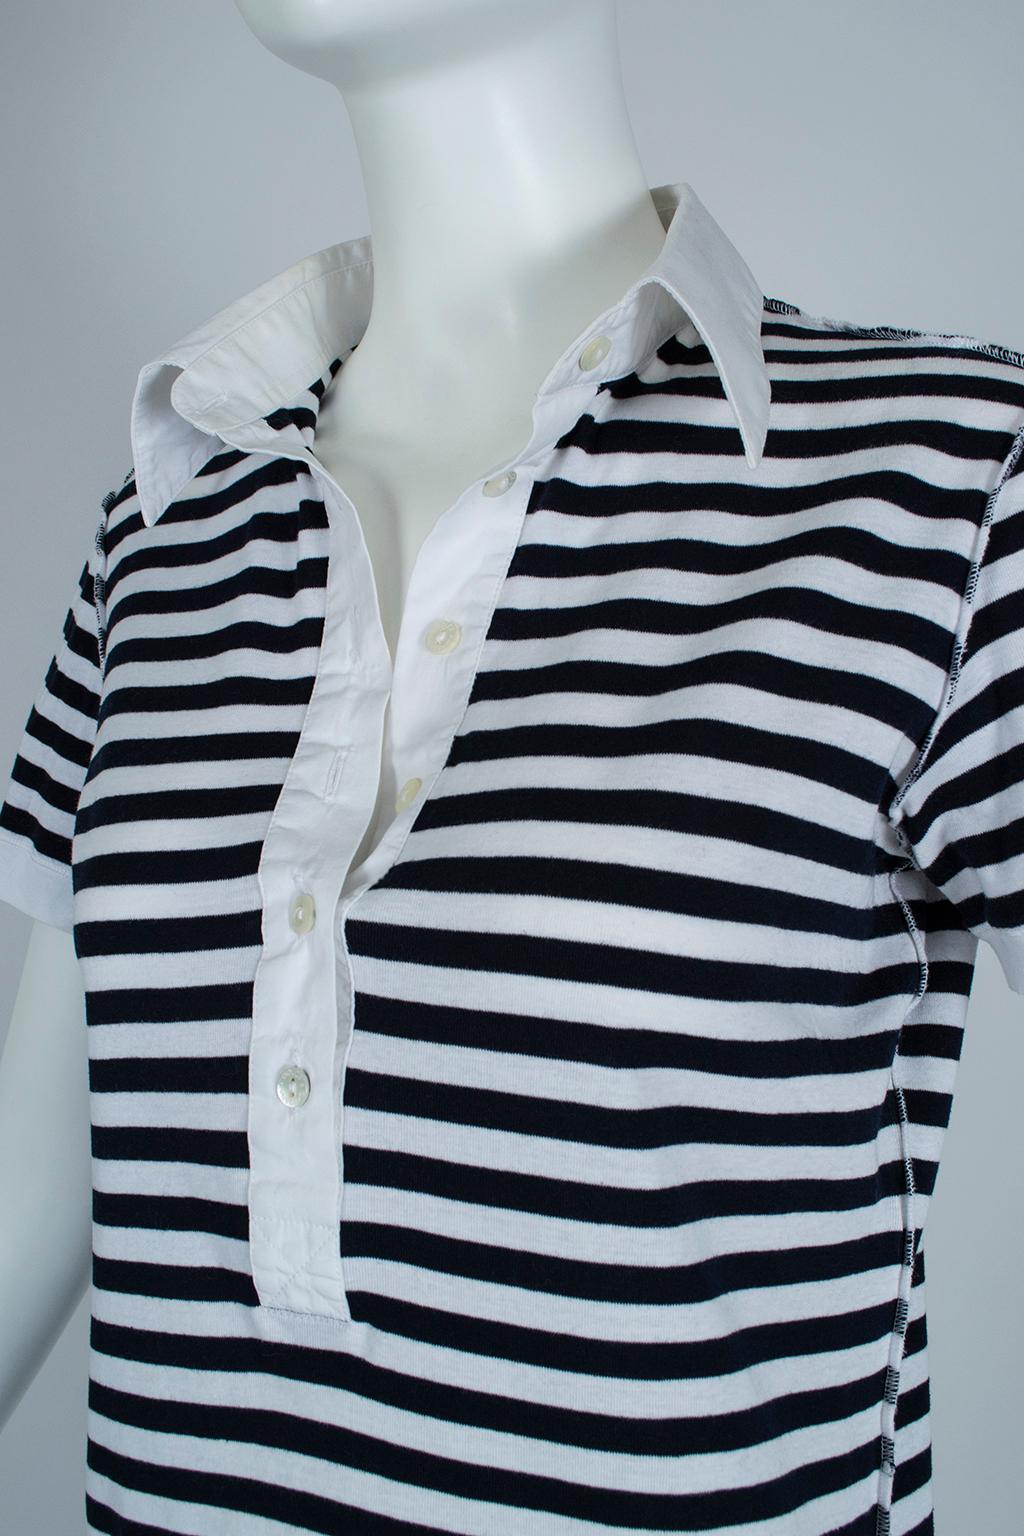 gondolier striped t shirts